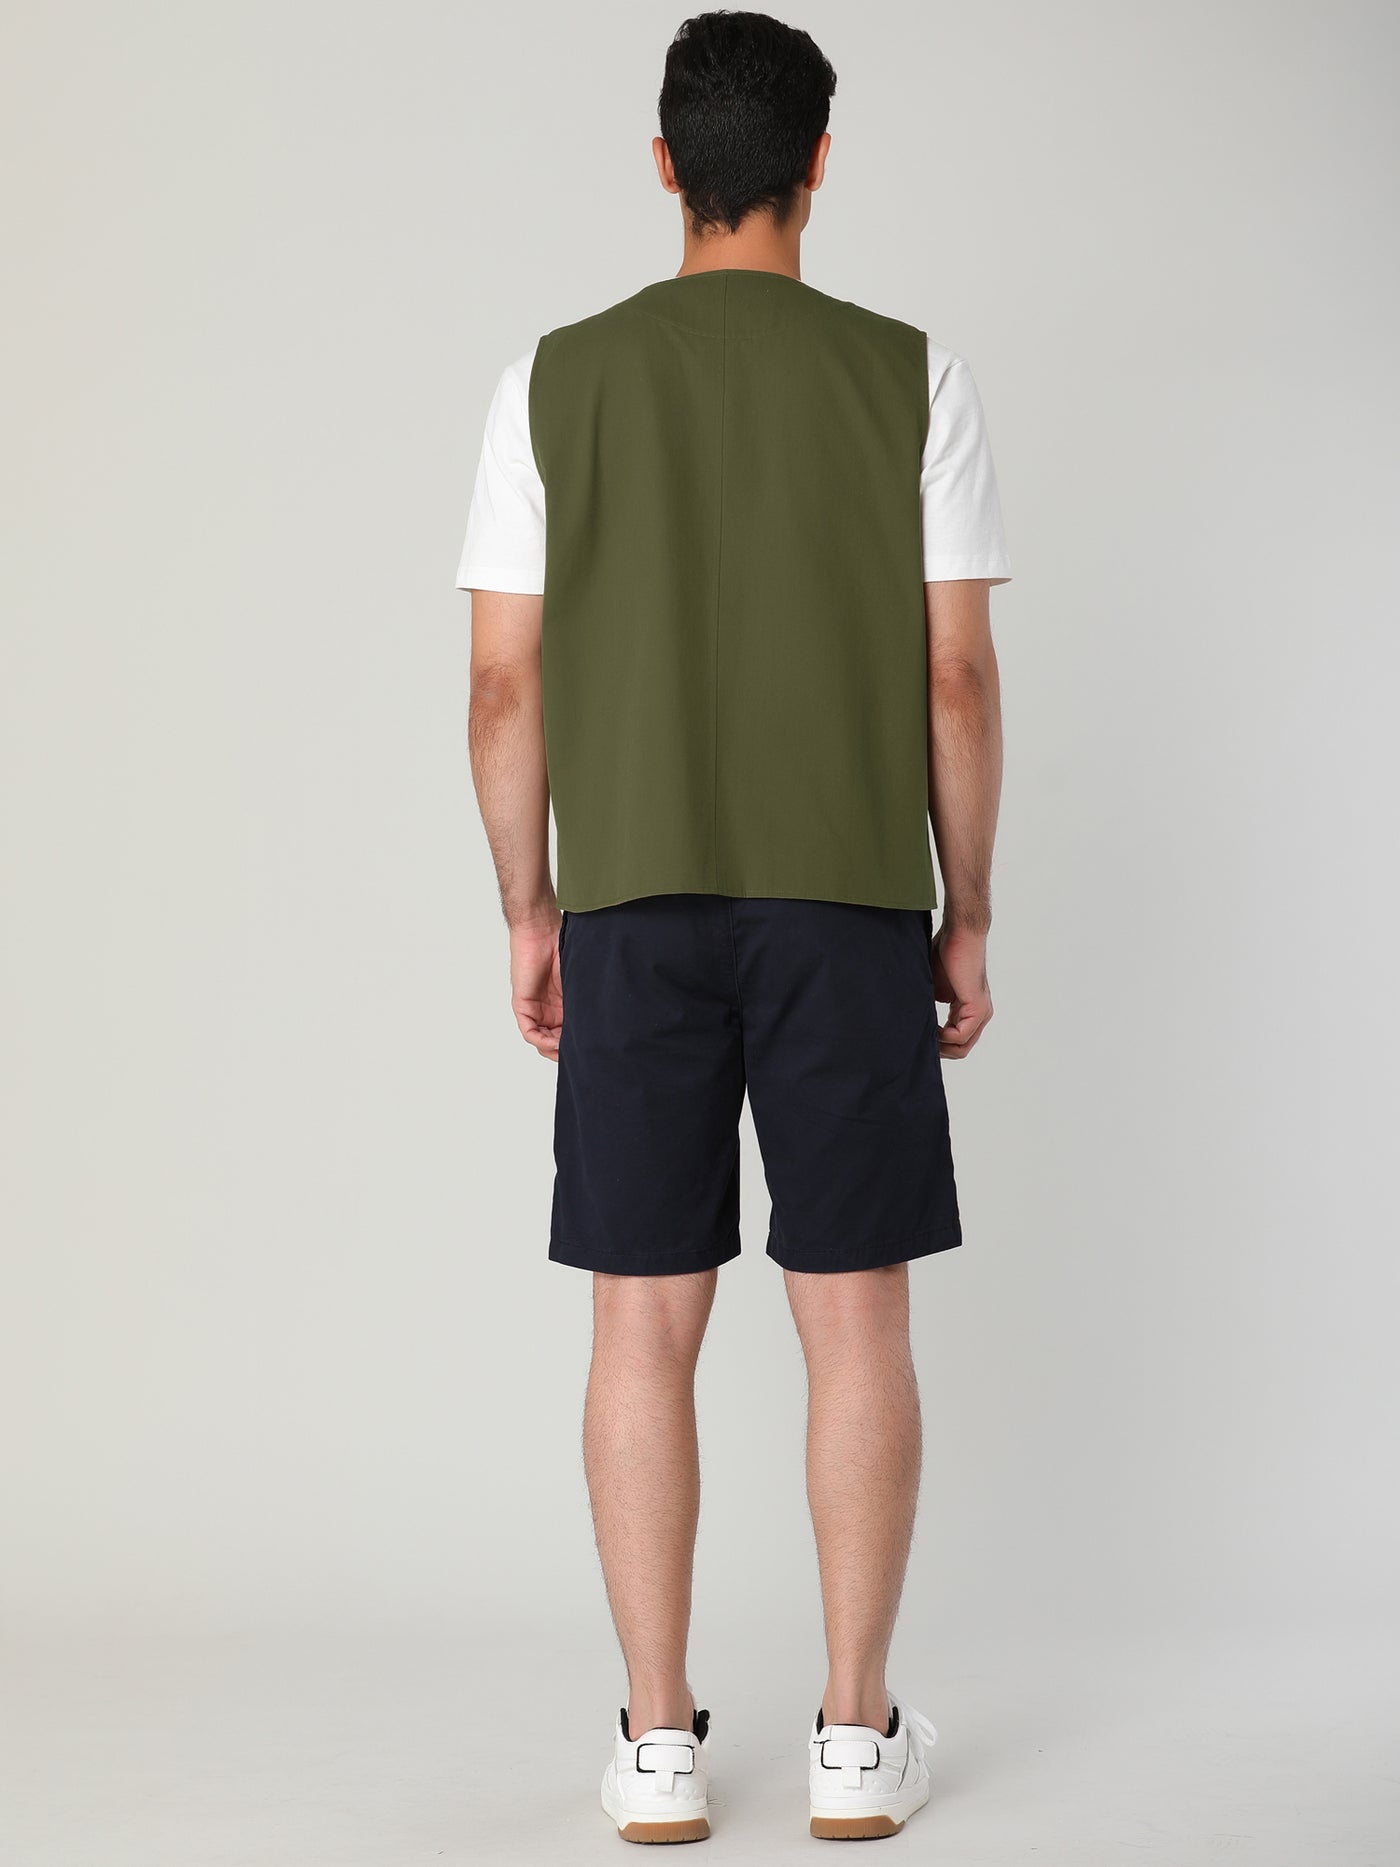 Bublédon Casual Cotton Pockets Plain V Neck Cargo Vests